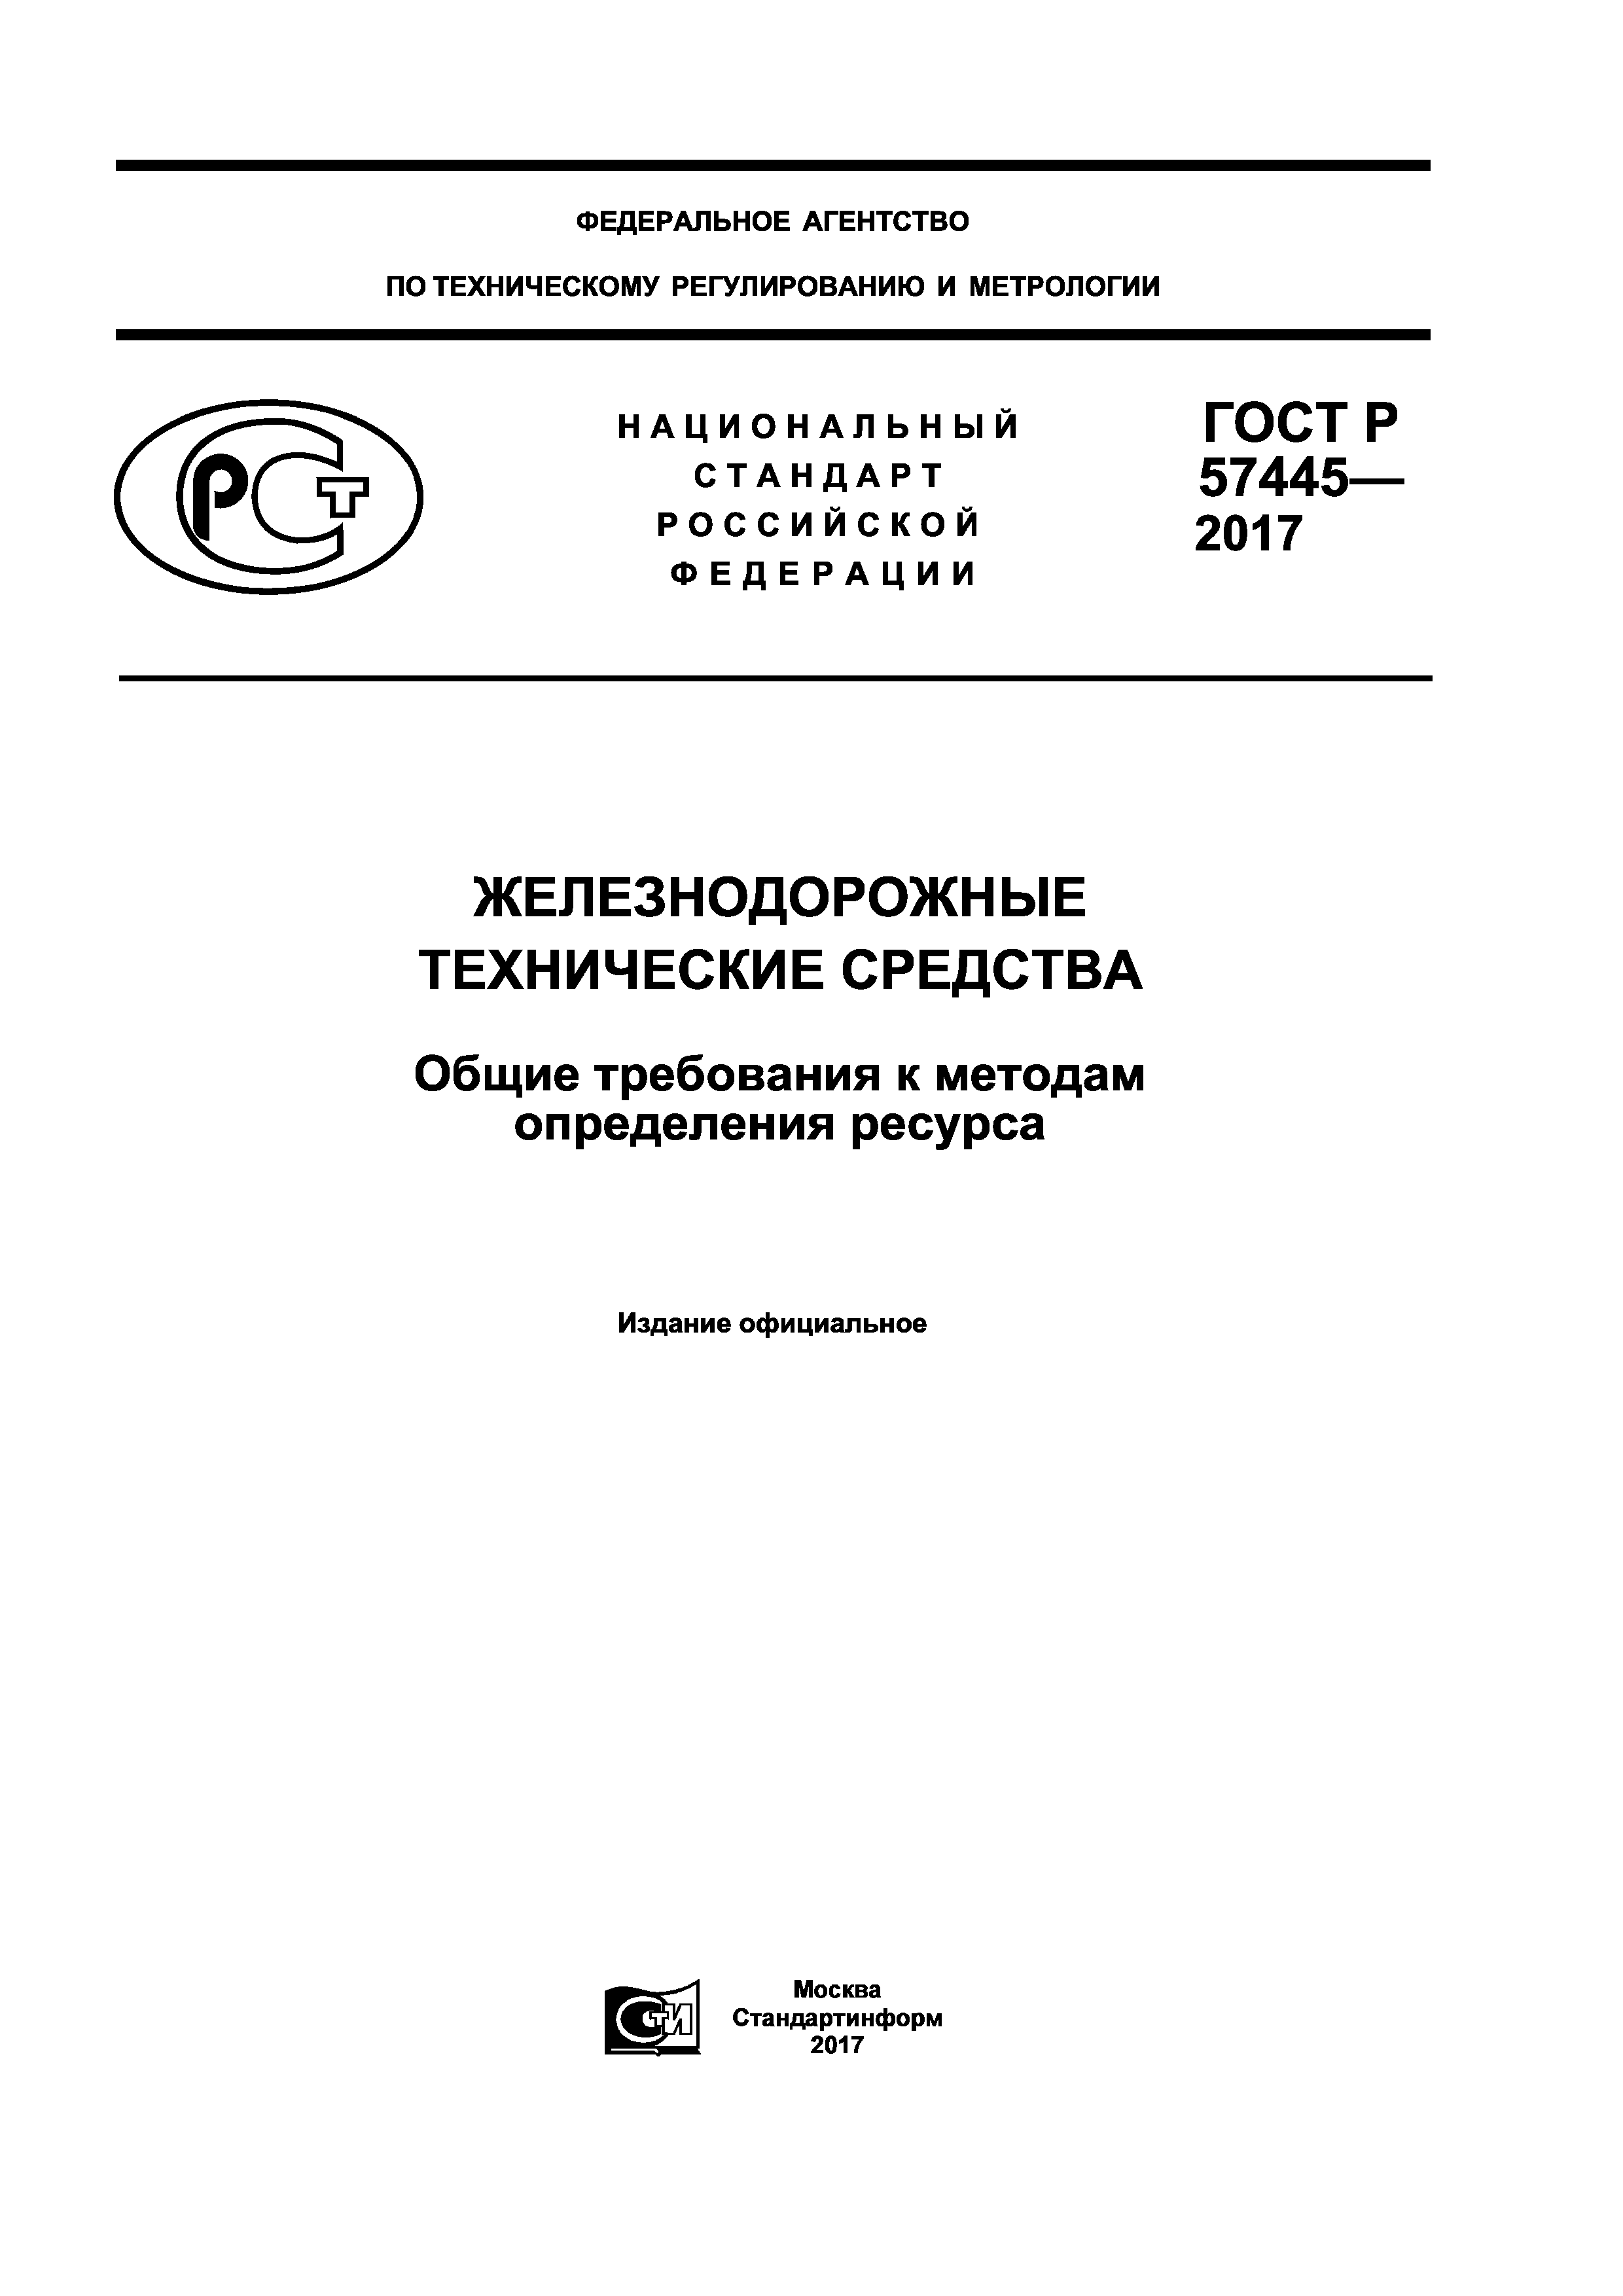 ГОСТ Р 57445-2017